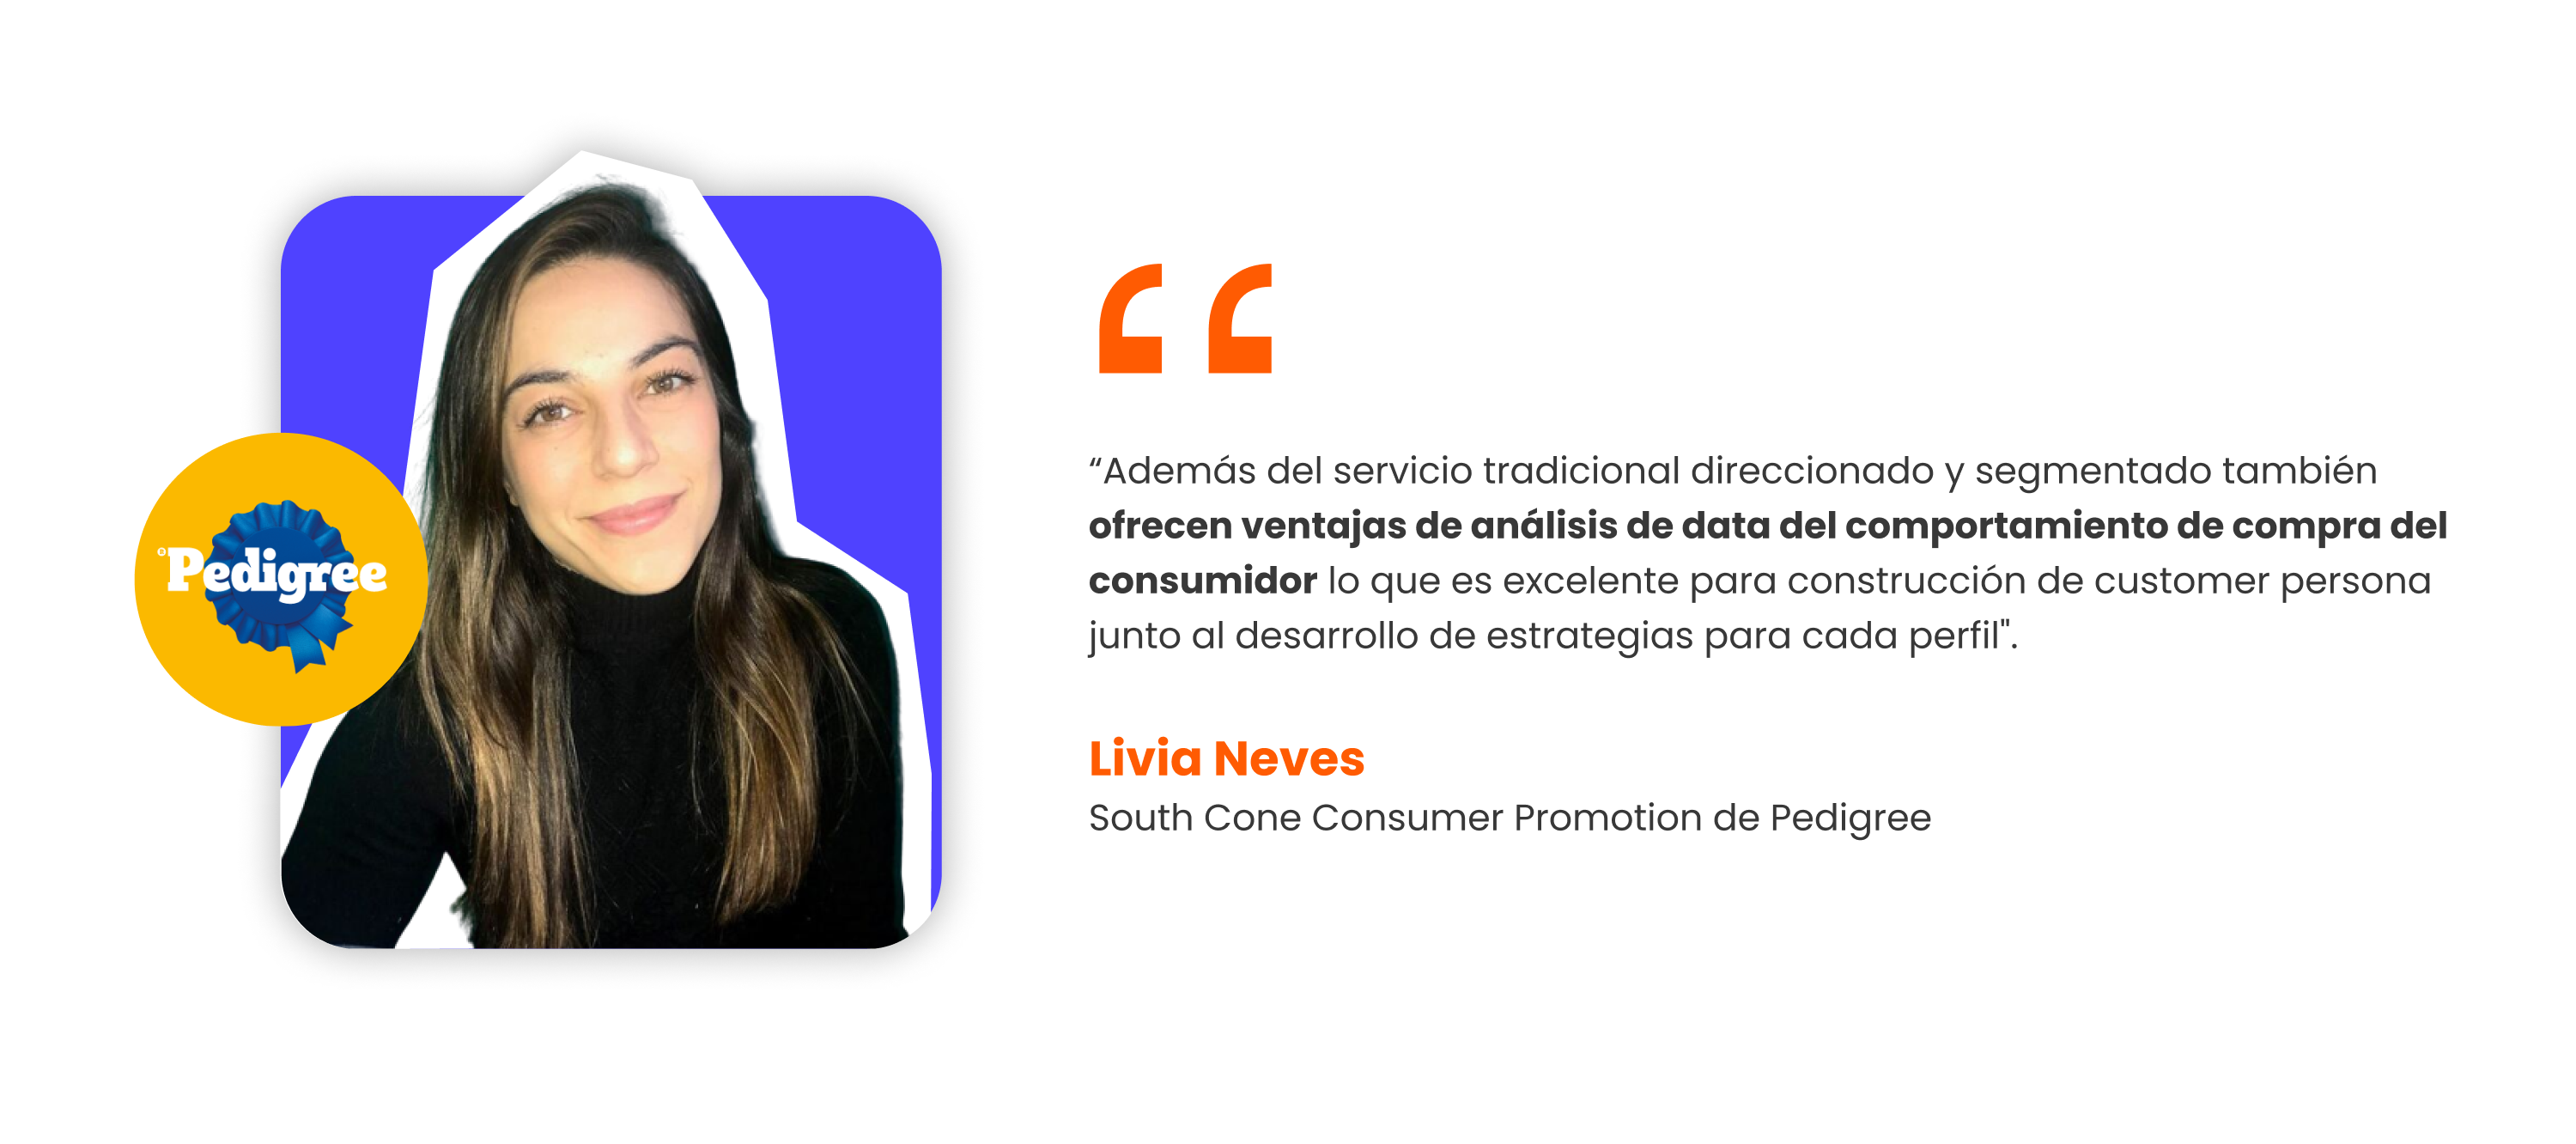 Livia Neves